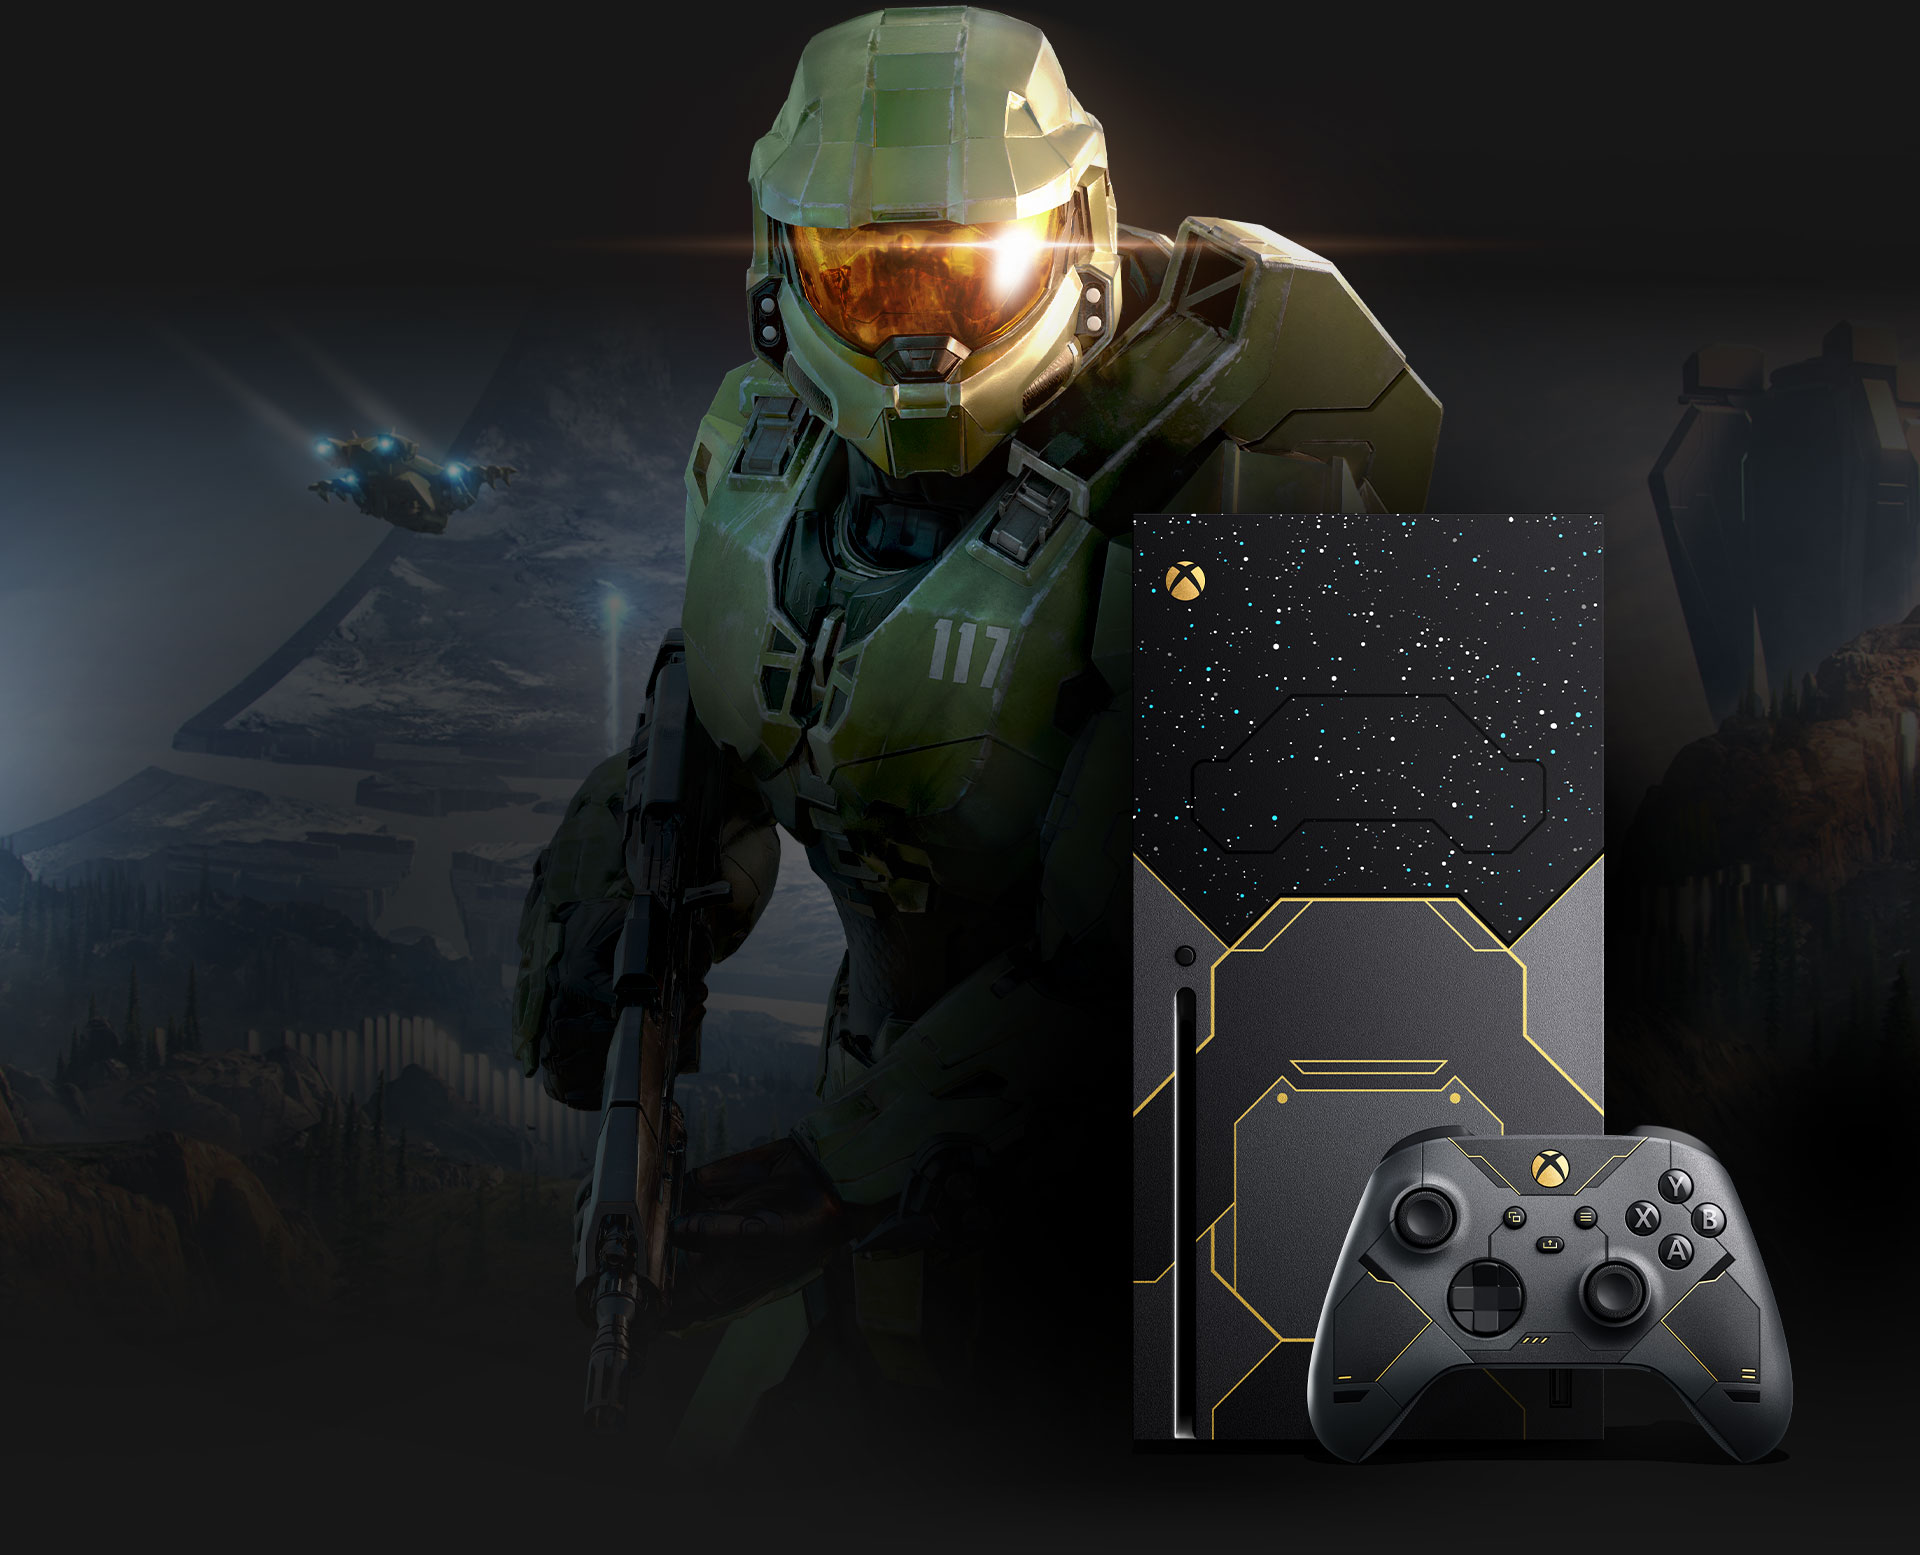 Microsoft Xbox Series X - Halo Infinite Limited Edition - Black